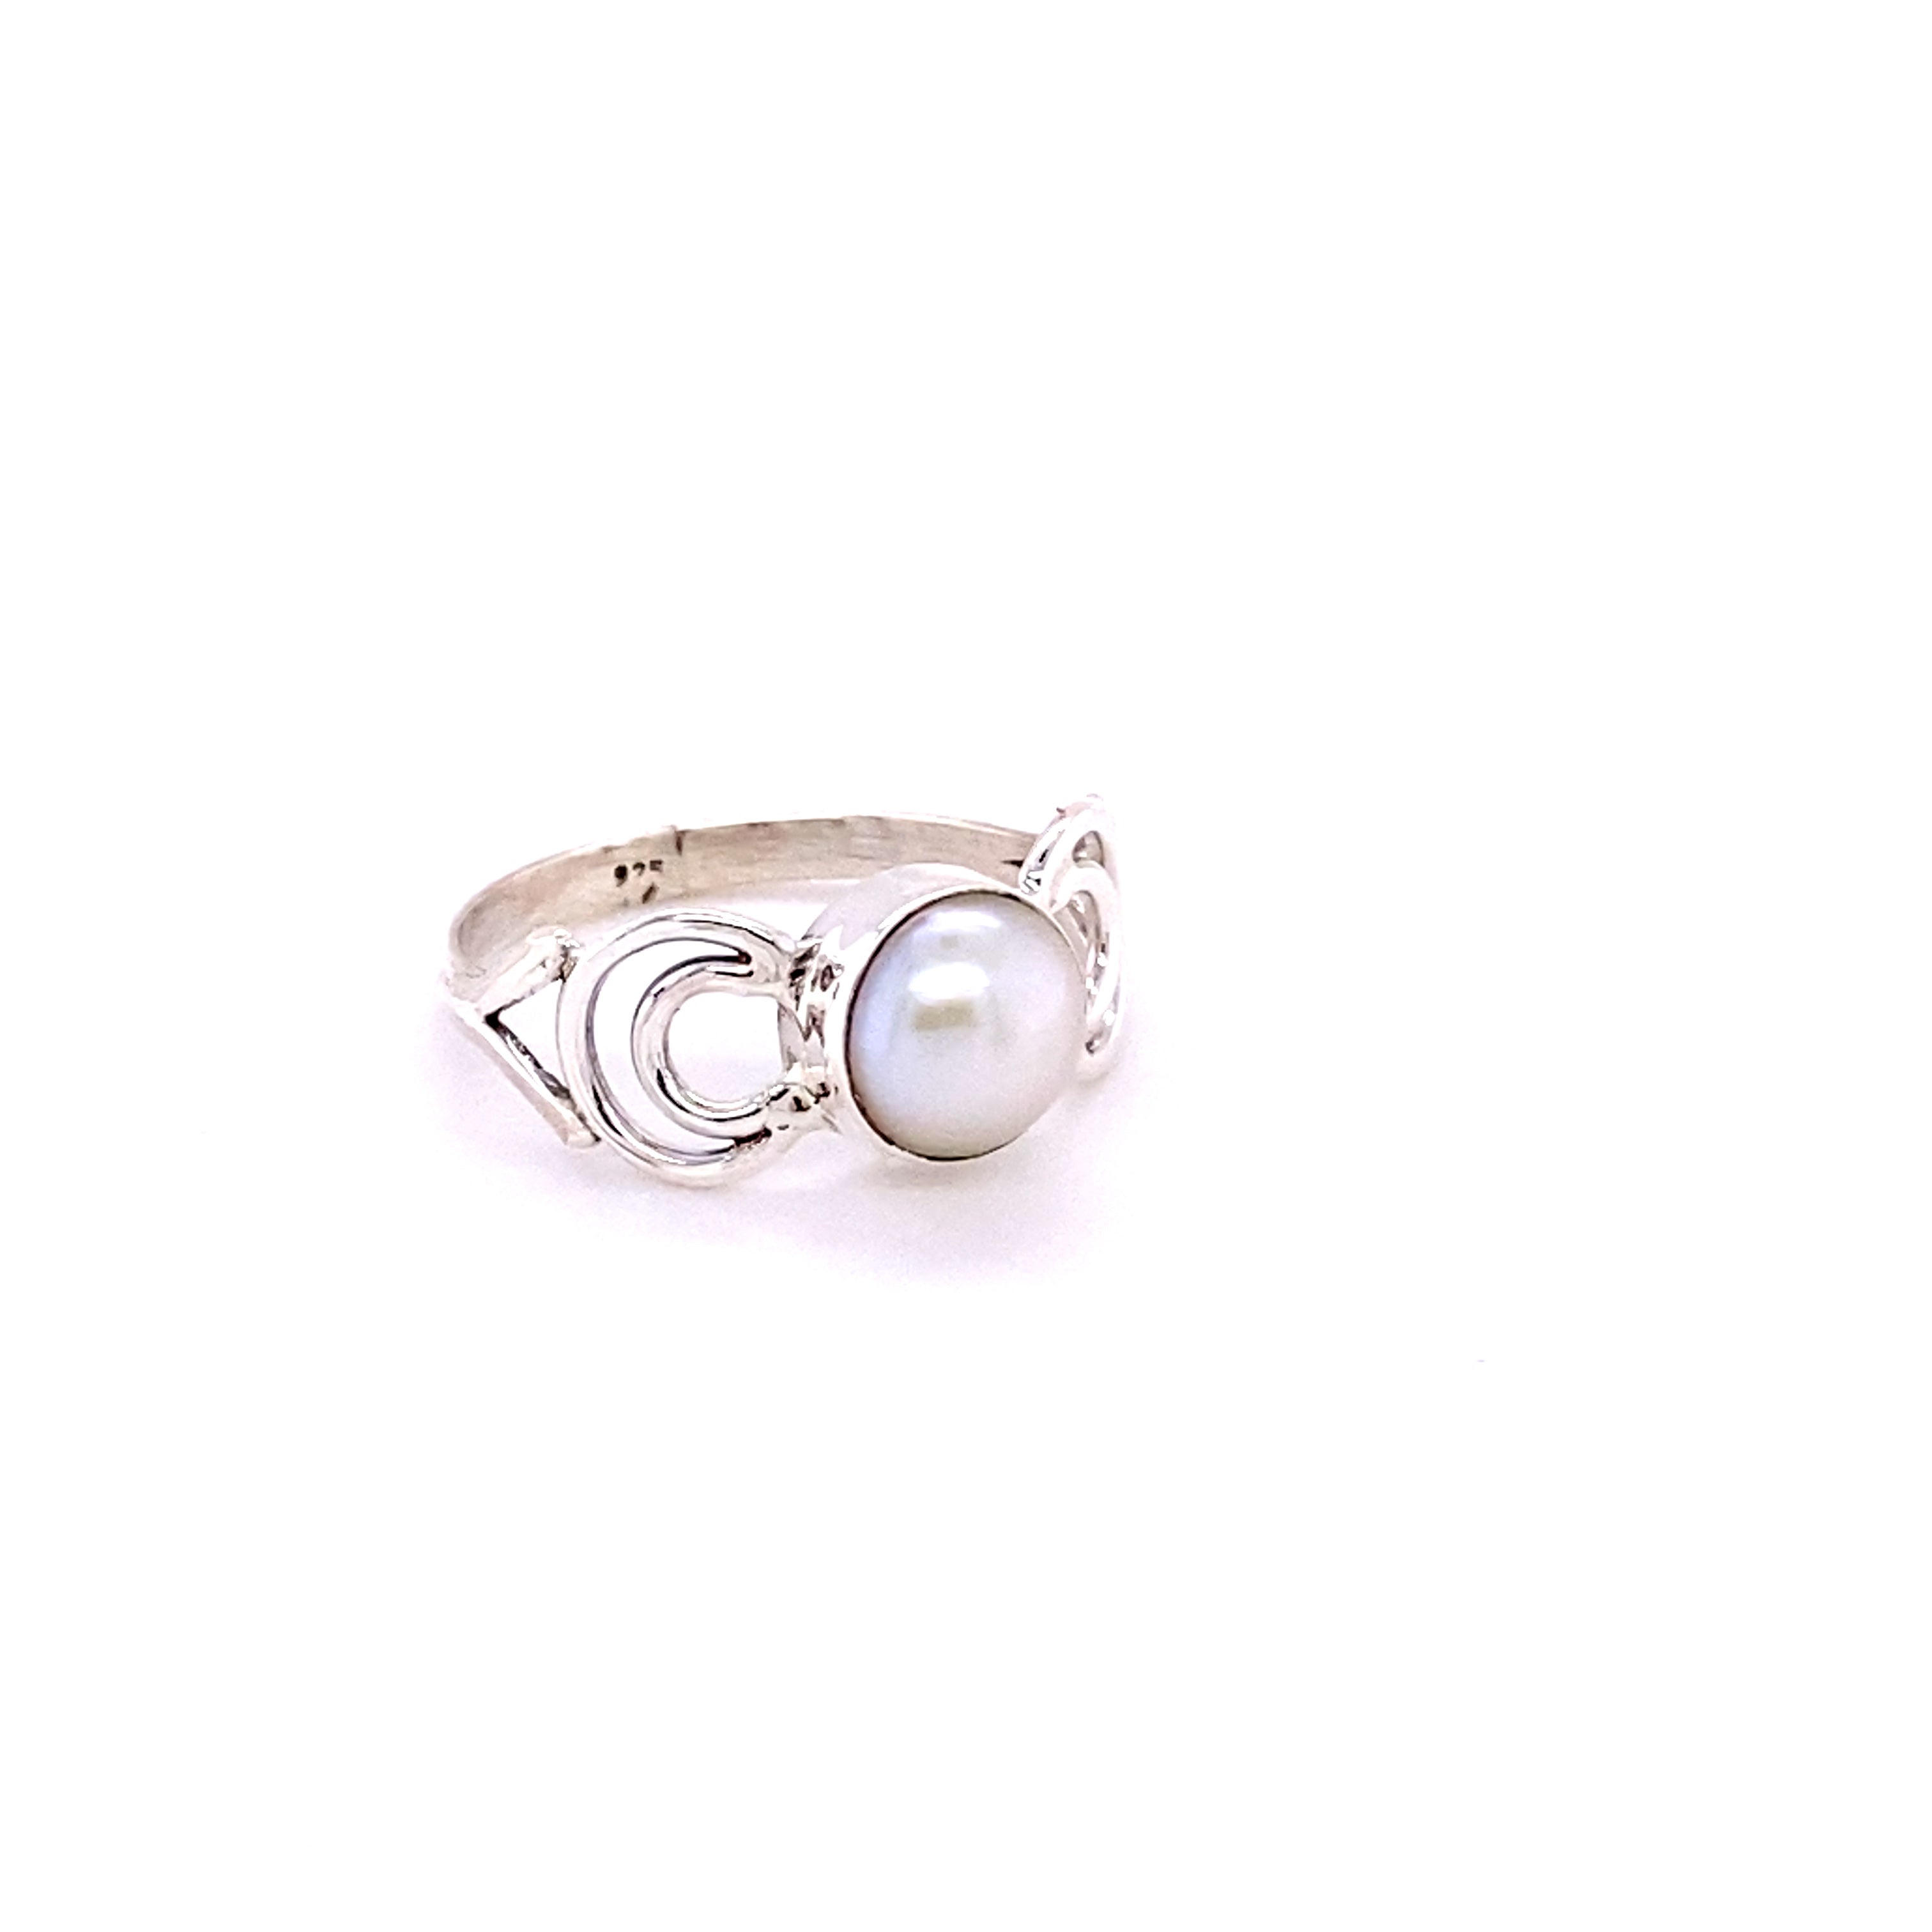 Three stone engagement ring designs | CustomMade.com